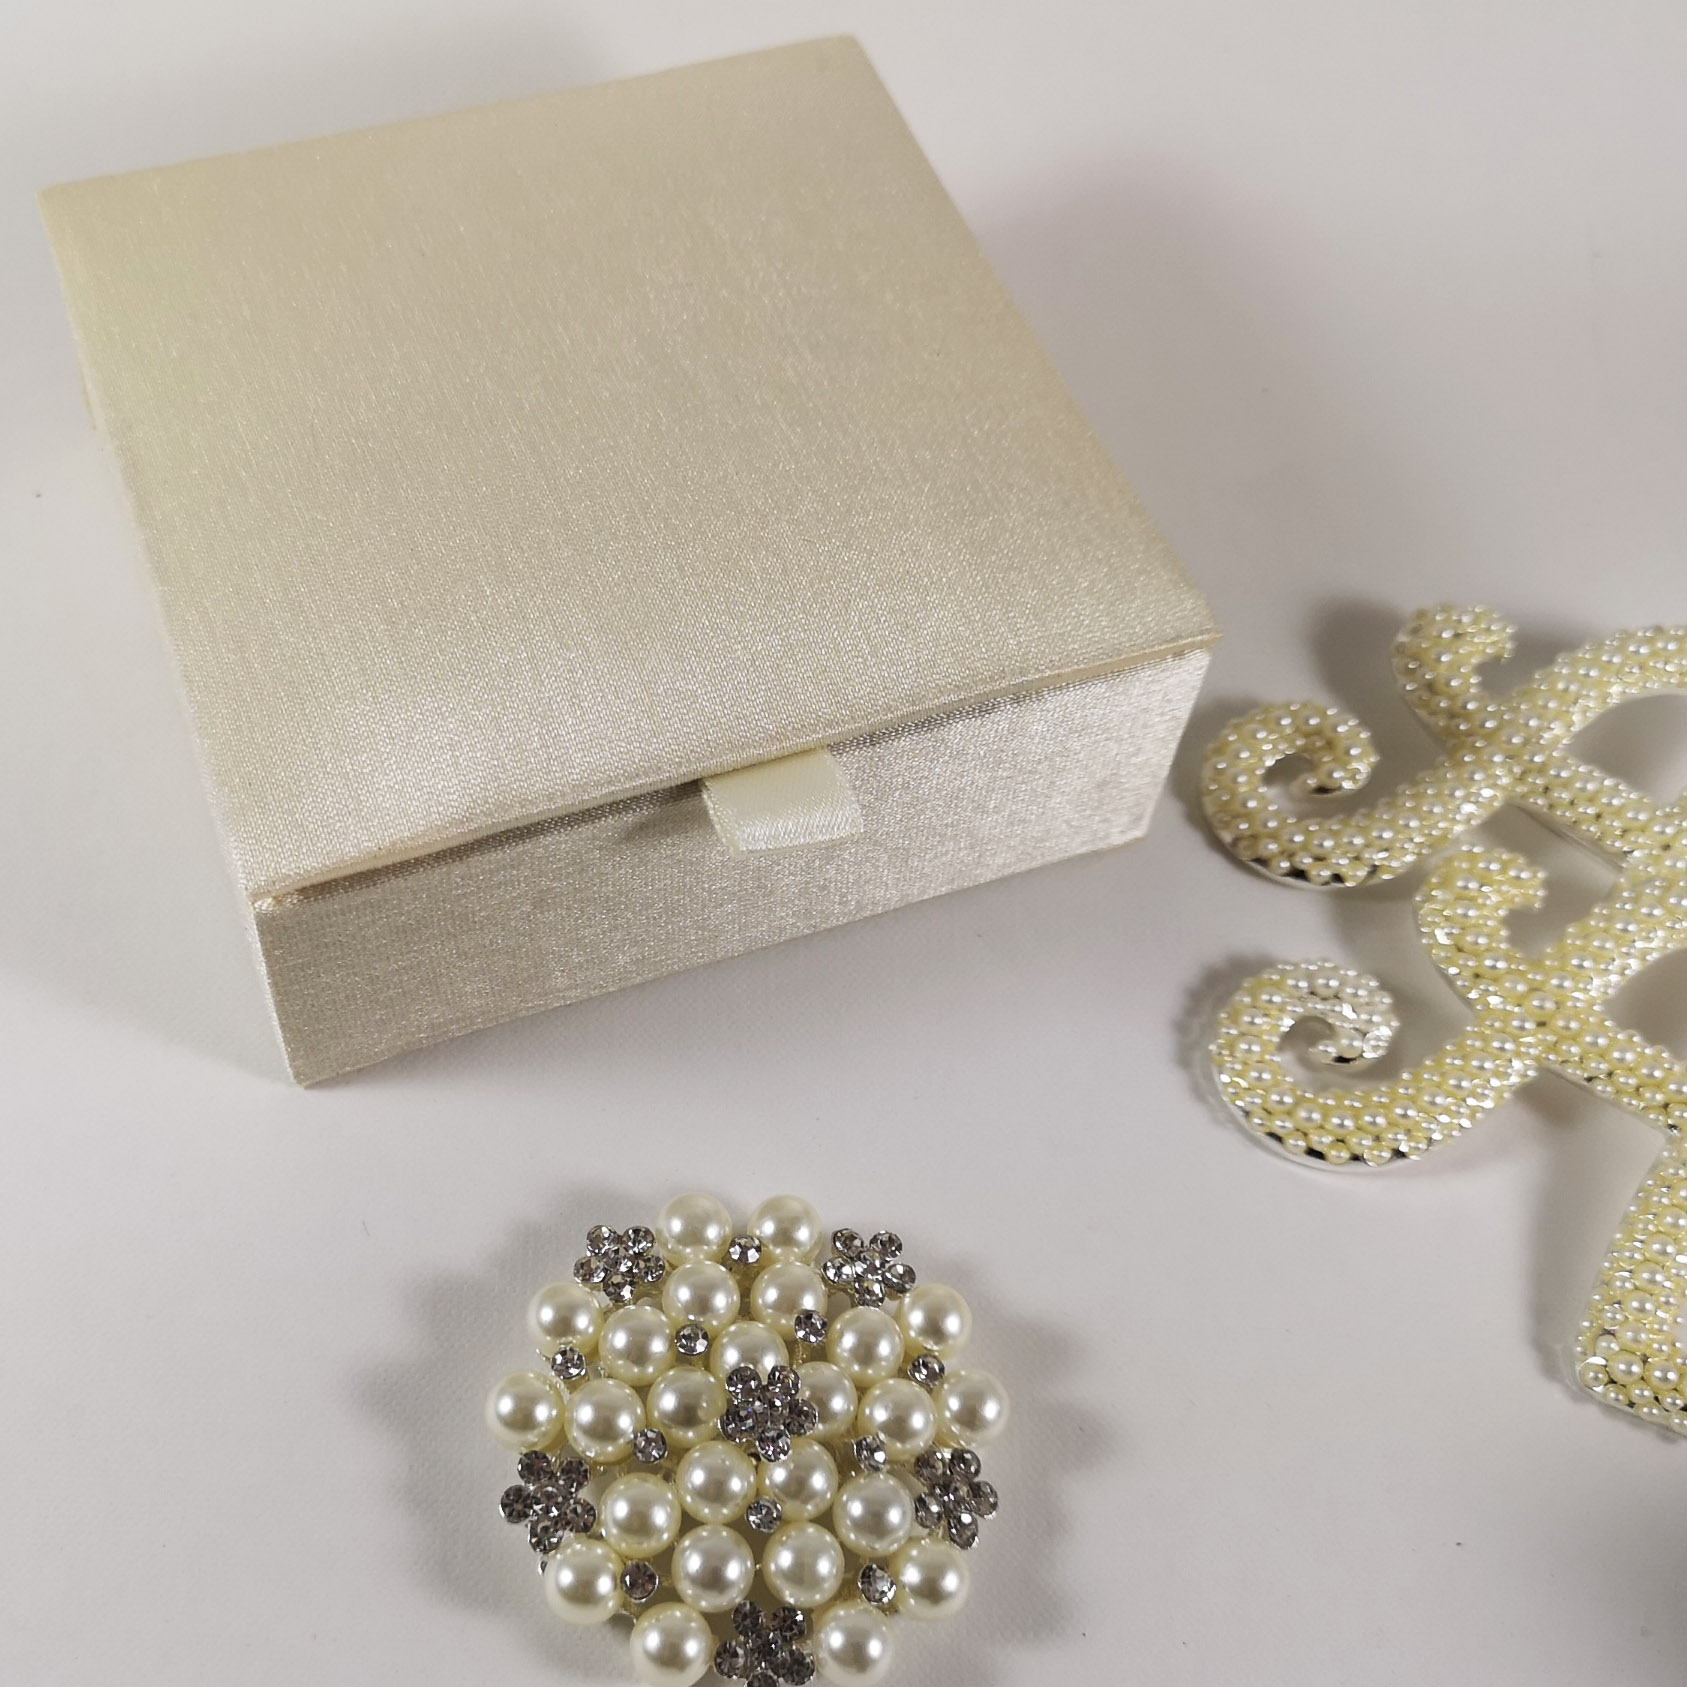 silk box for jewelry